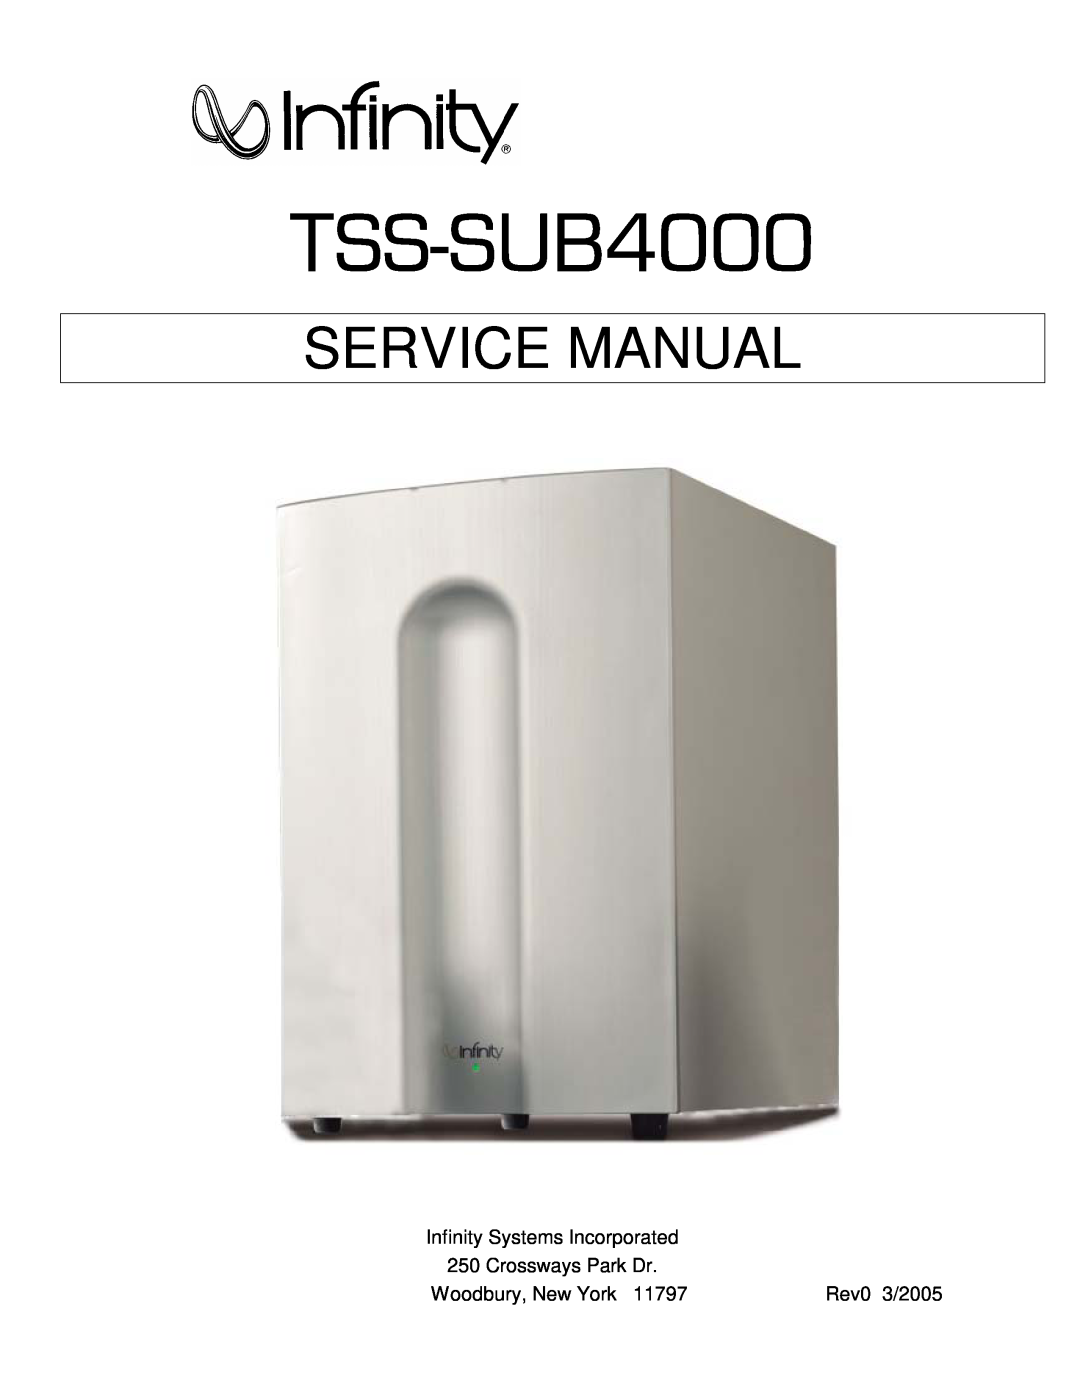 Infinity manual Total Speaker Solutions, TSS-SUB4000Owner’s Guide, TSS-4000 